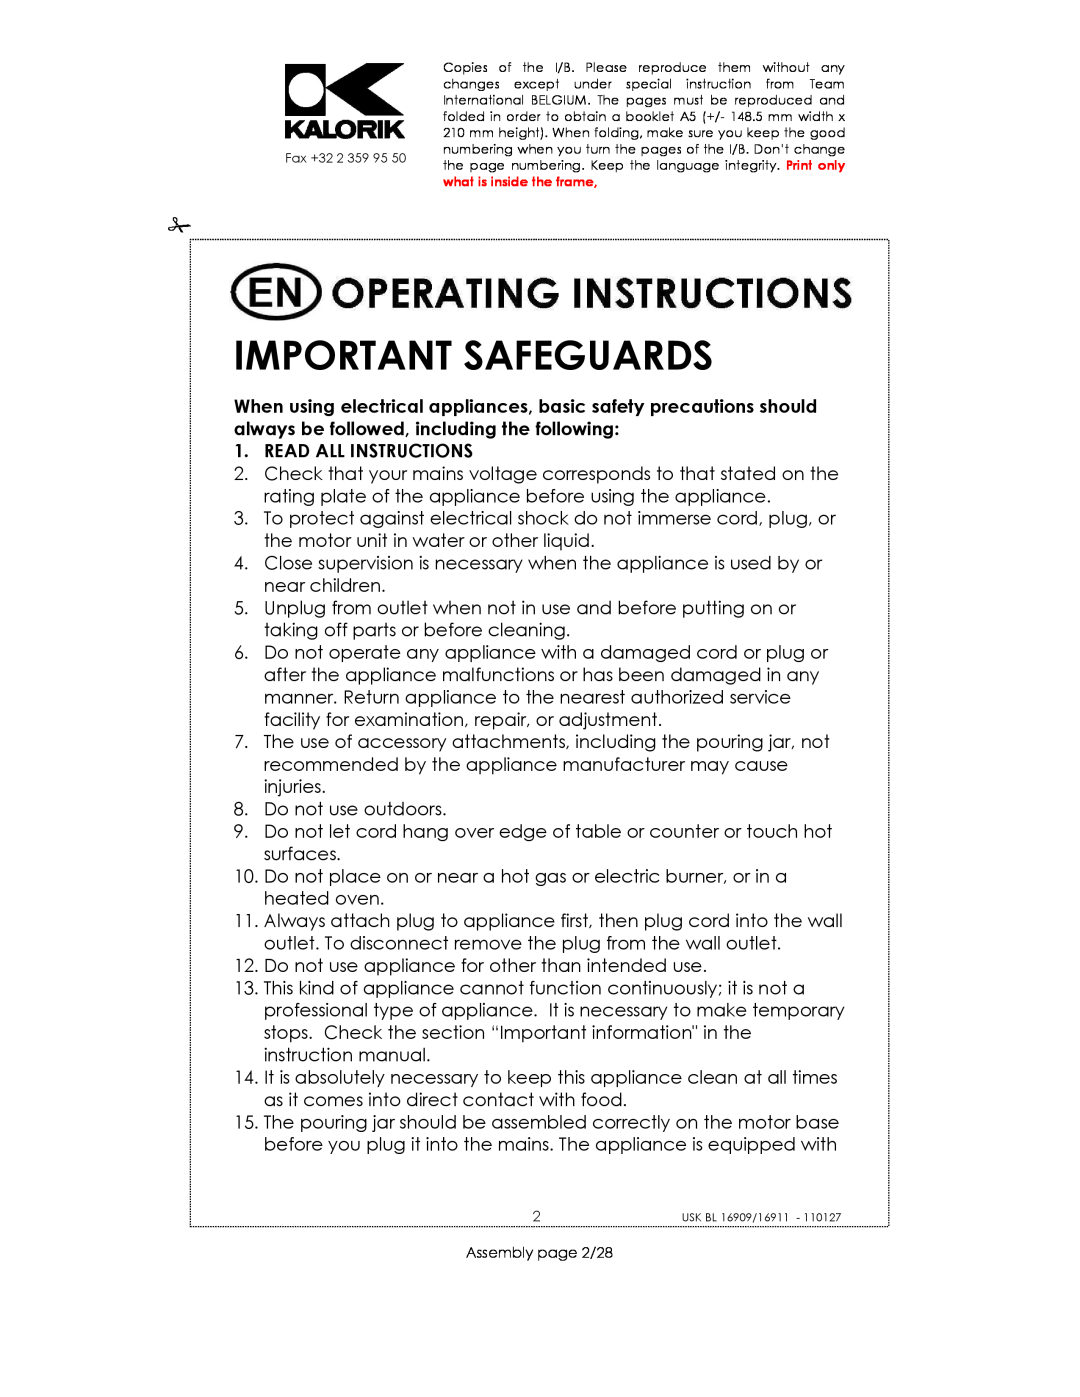 Kalorik 16911, usk bl 16909, 33029 manual Important Safeguards, Read All Instructions 